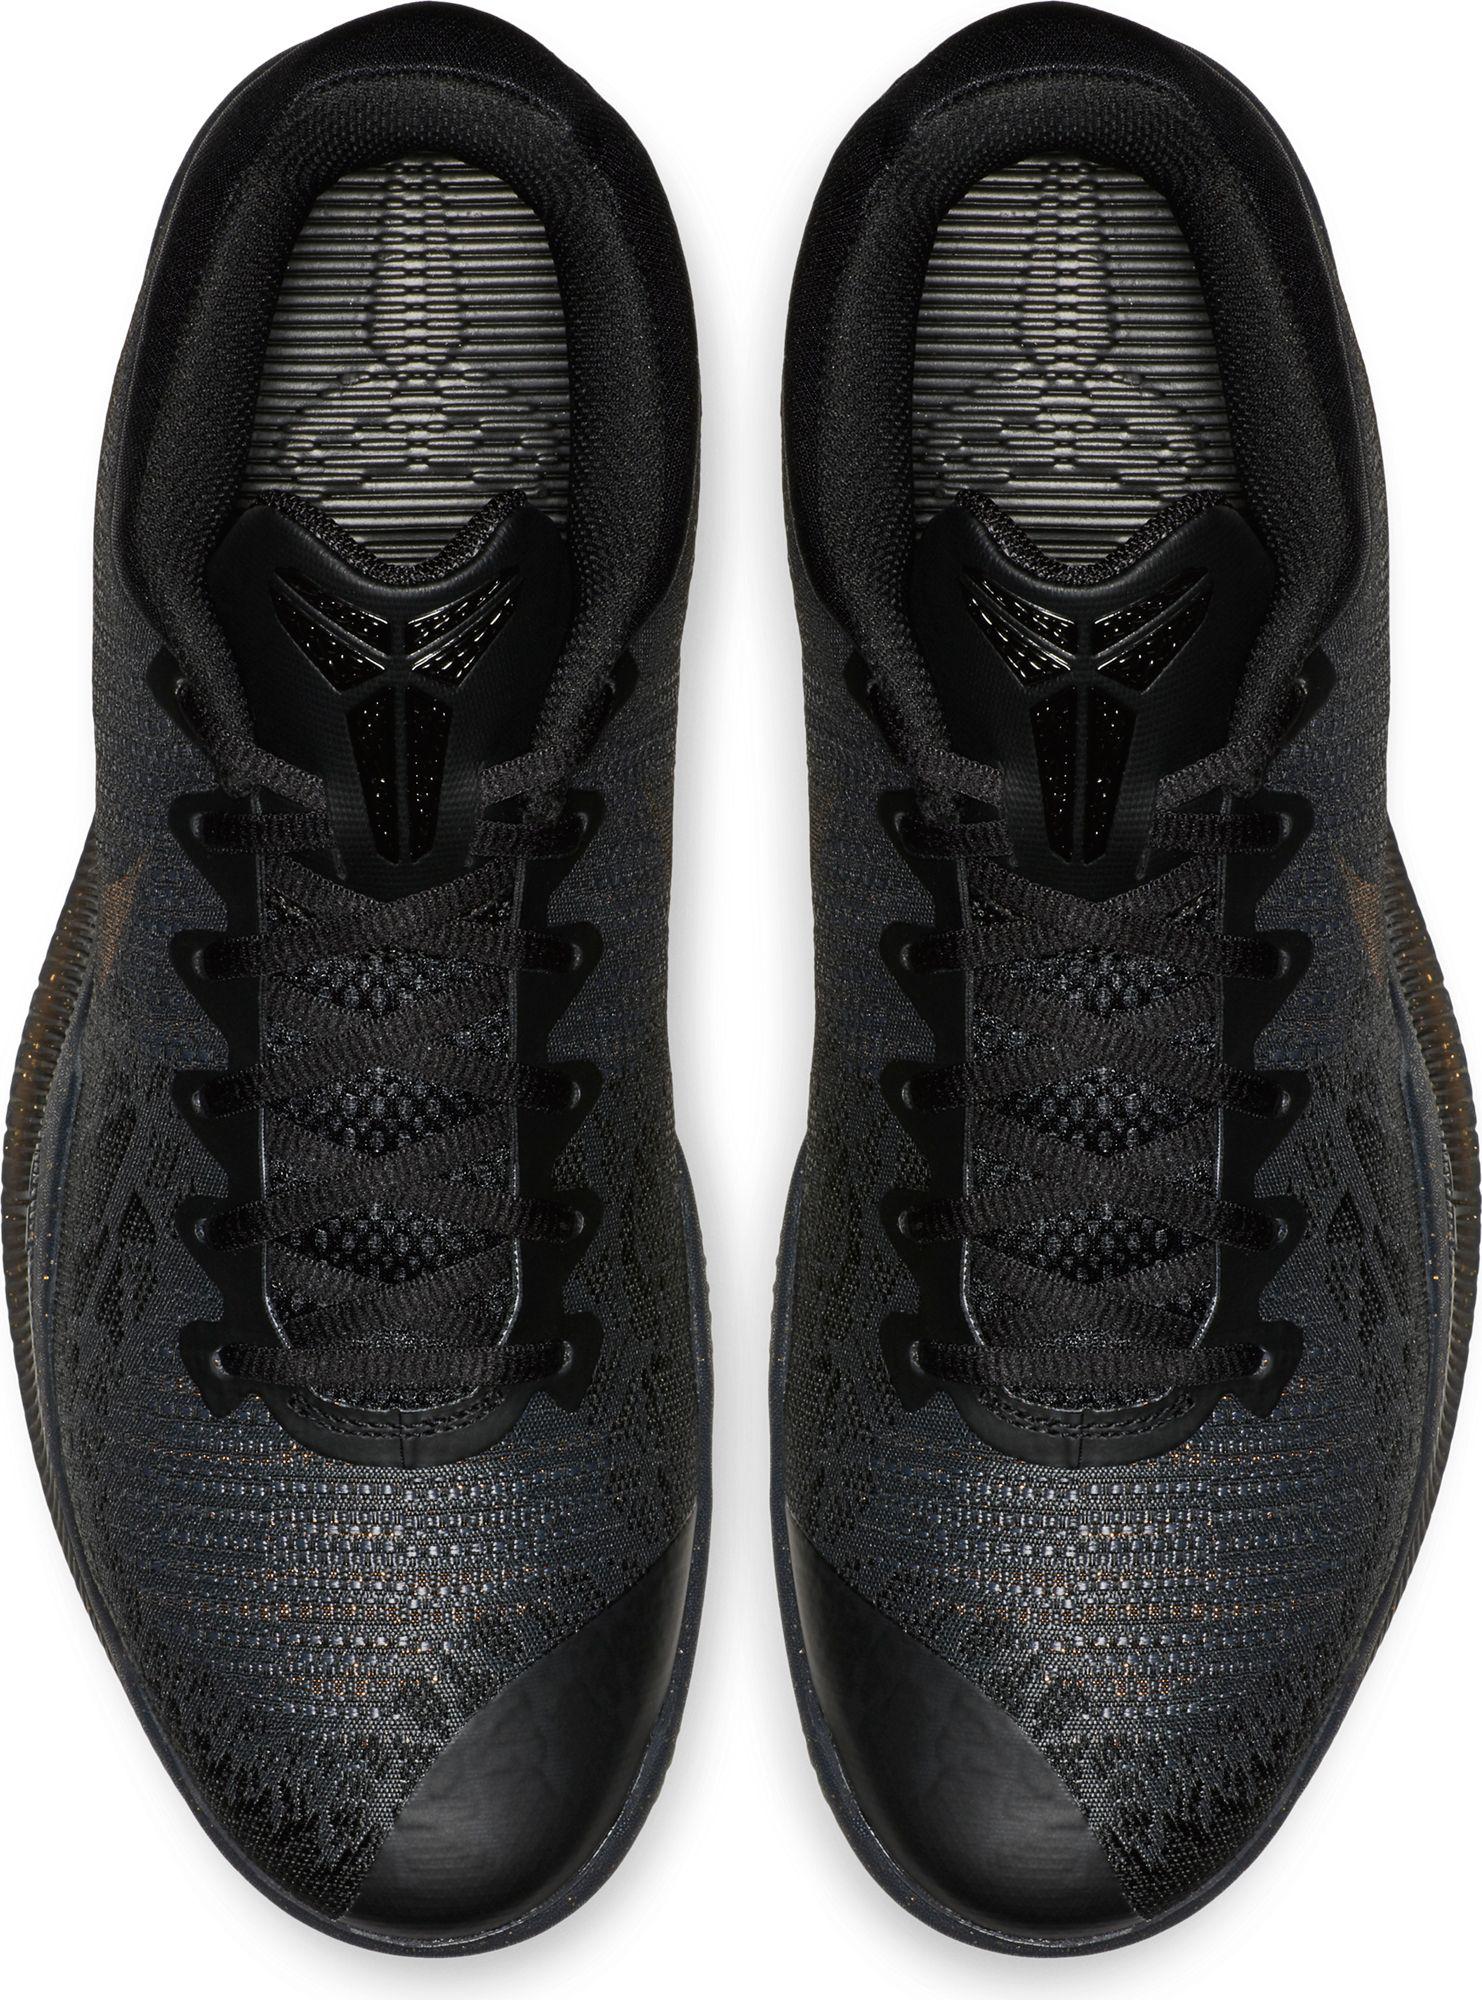 Nike Rubber Kobe Mamba Rage Basketball Shoes in Black/Gold